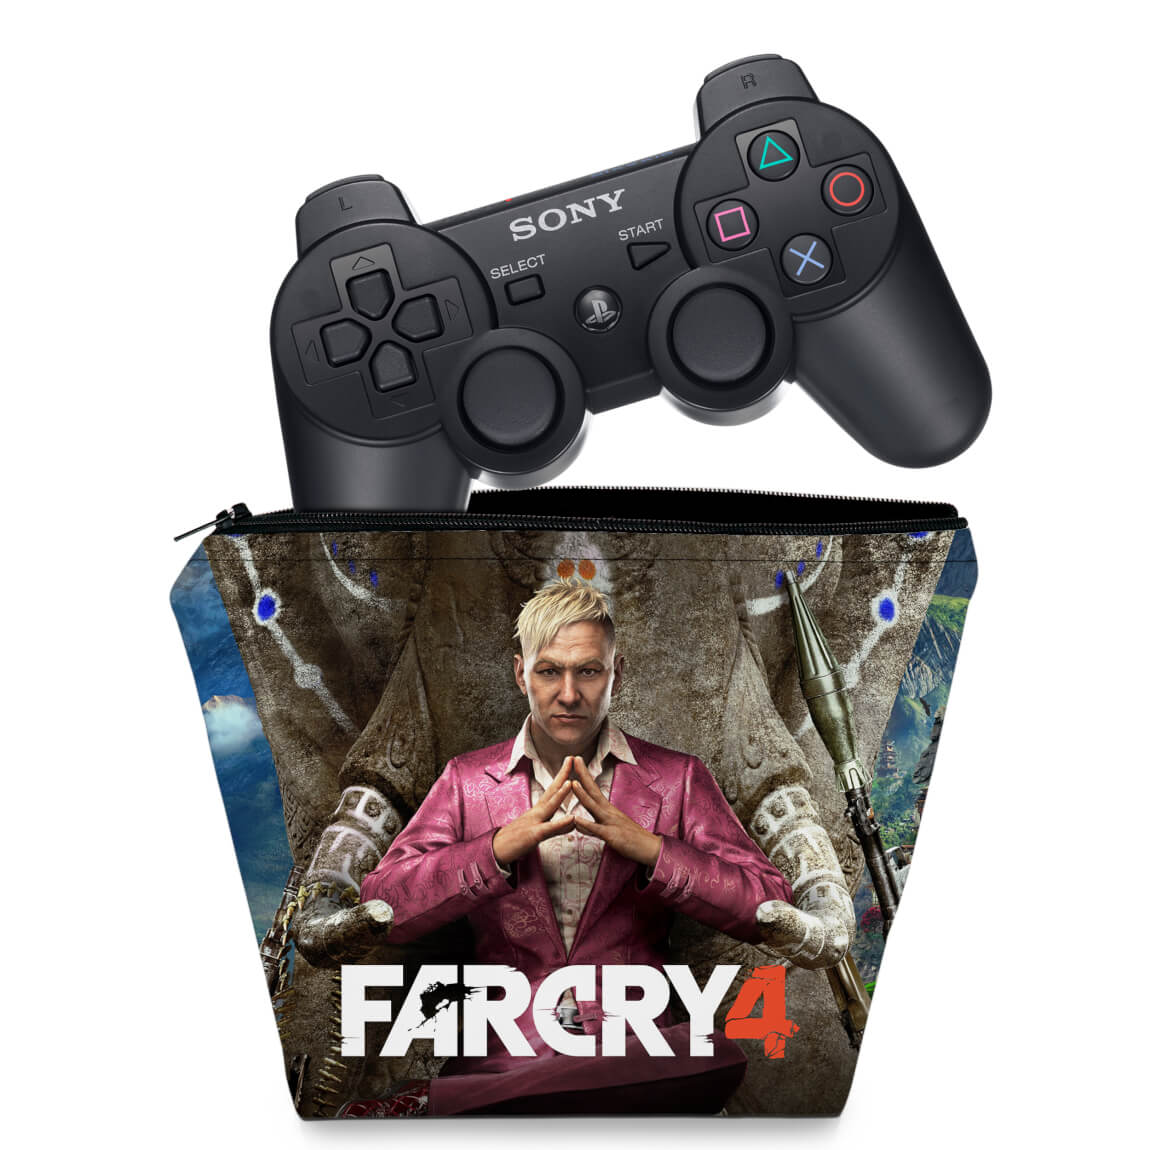 Far Cry 3 & Far Cry 4 PS3 Game